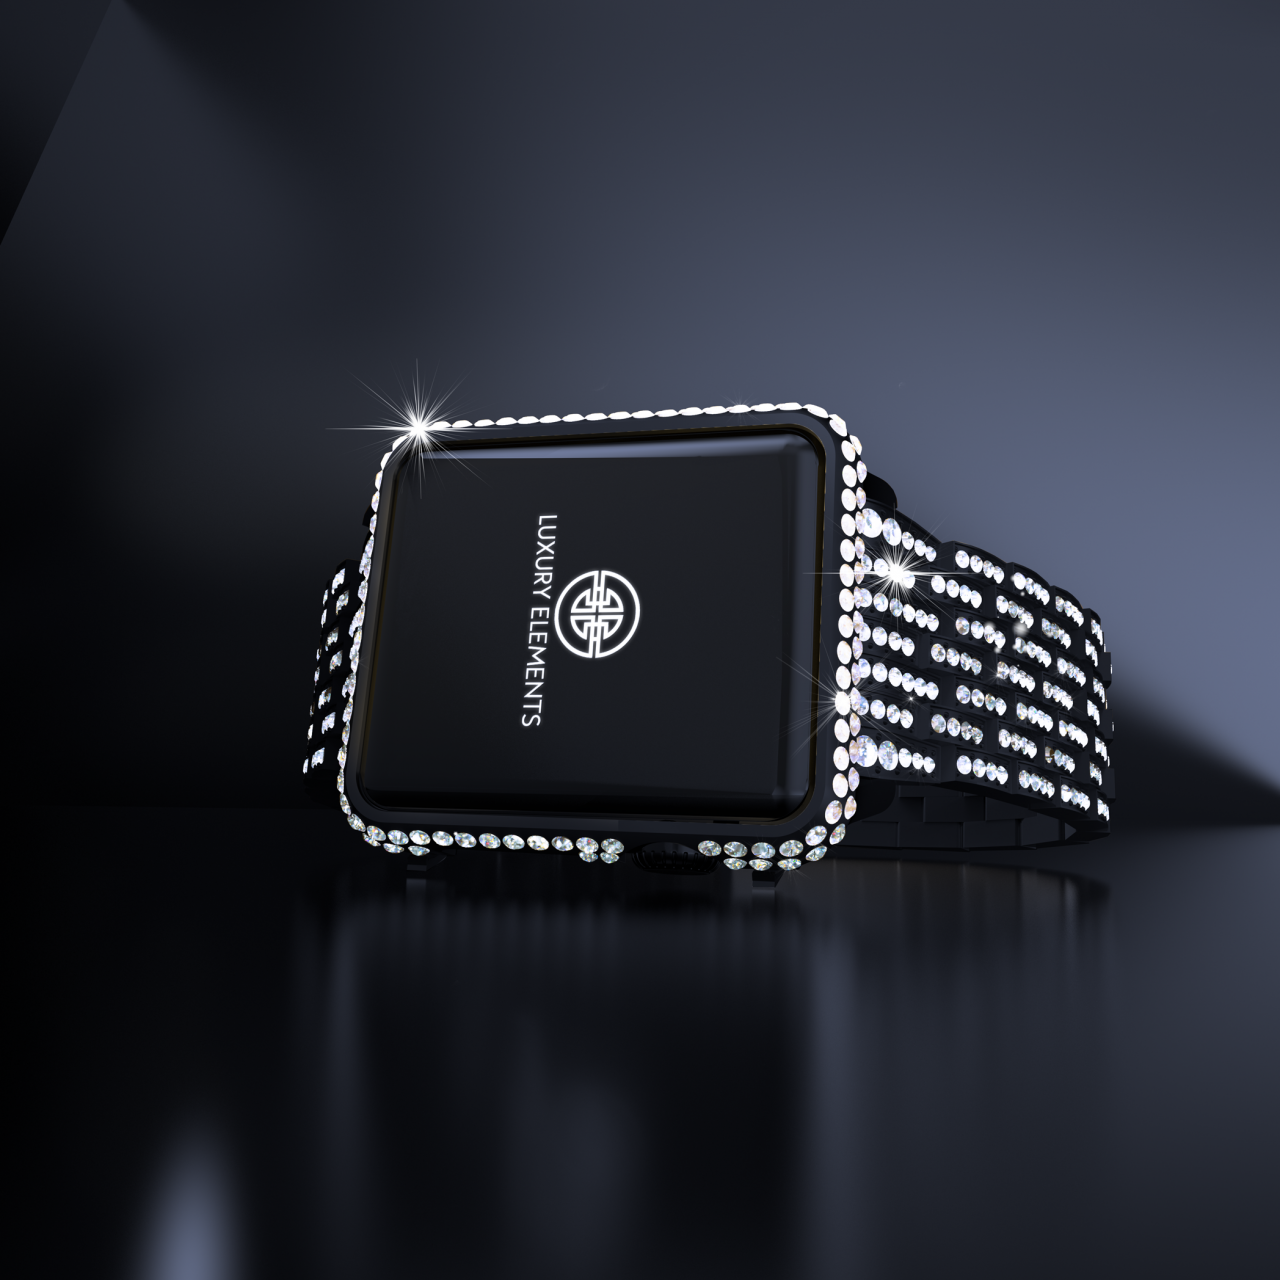 Apple Watch Diamond Black Edition